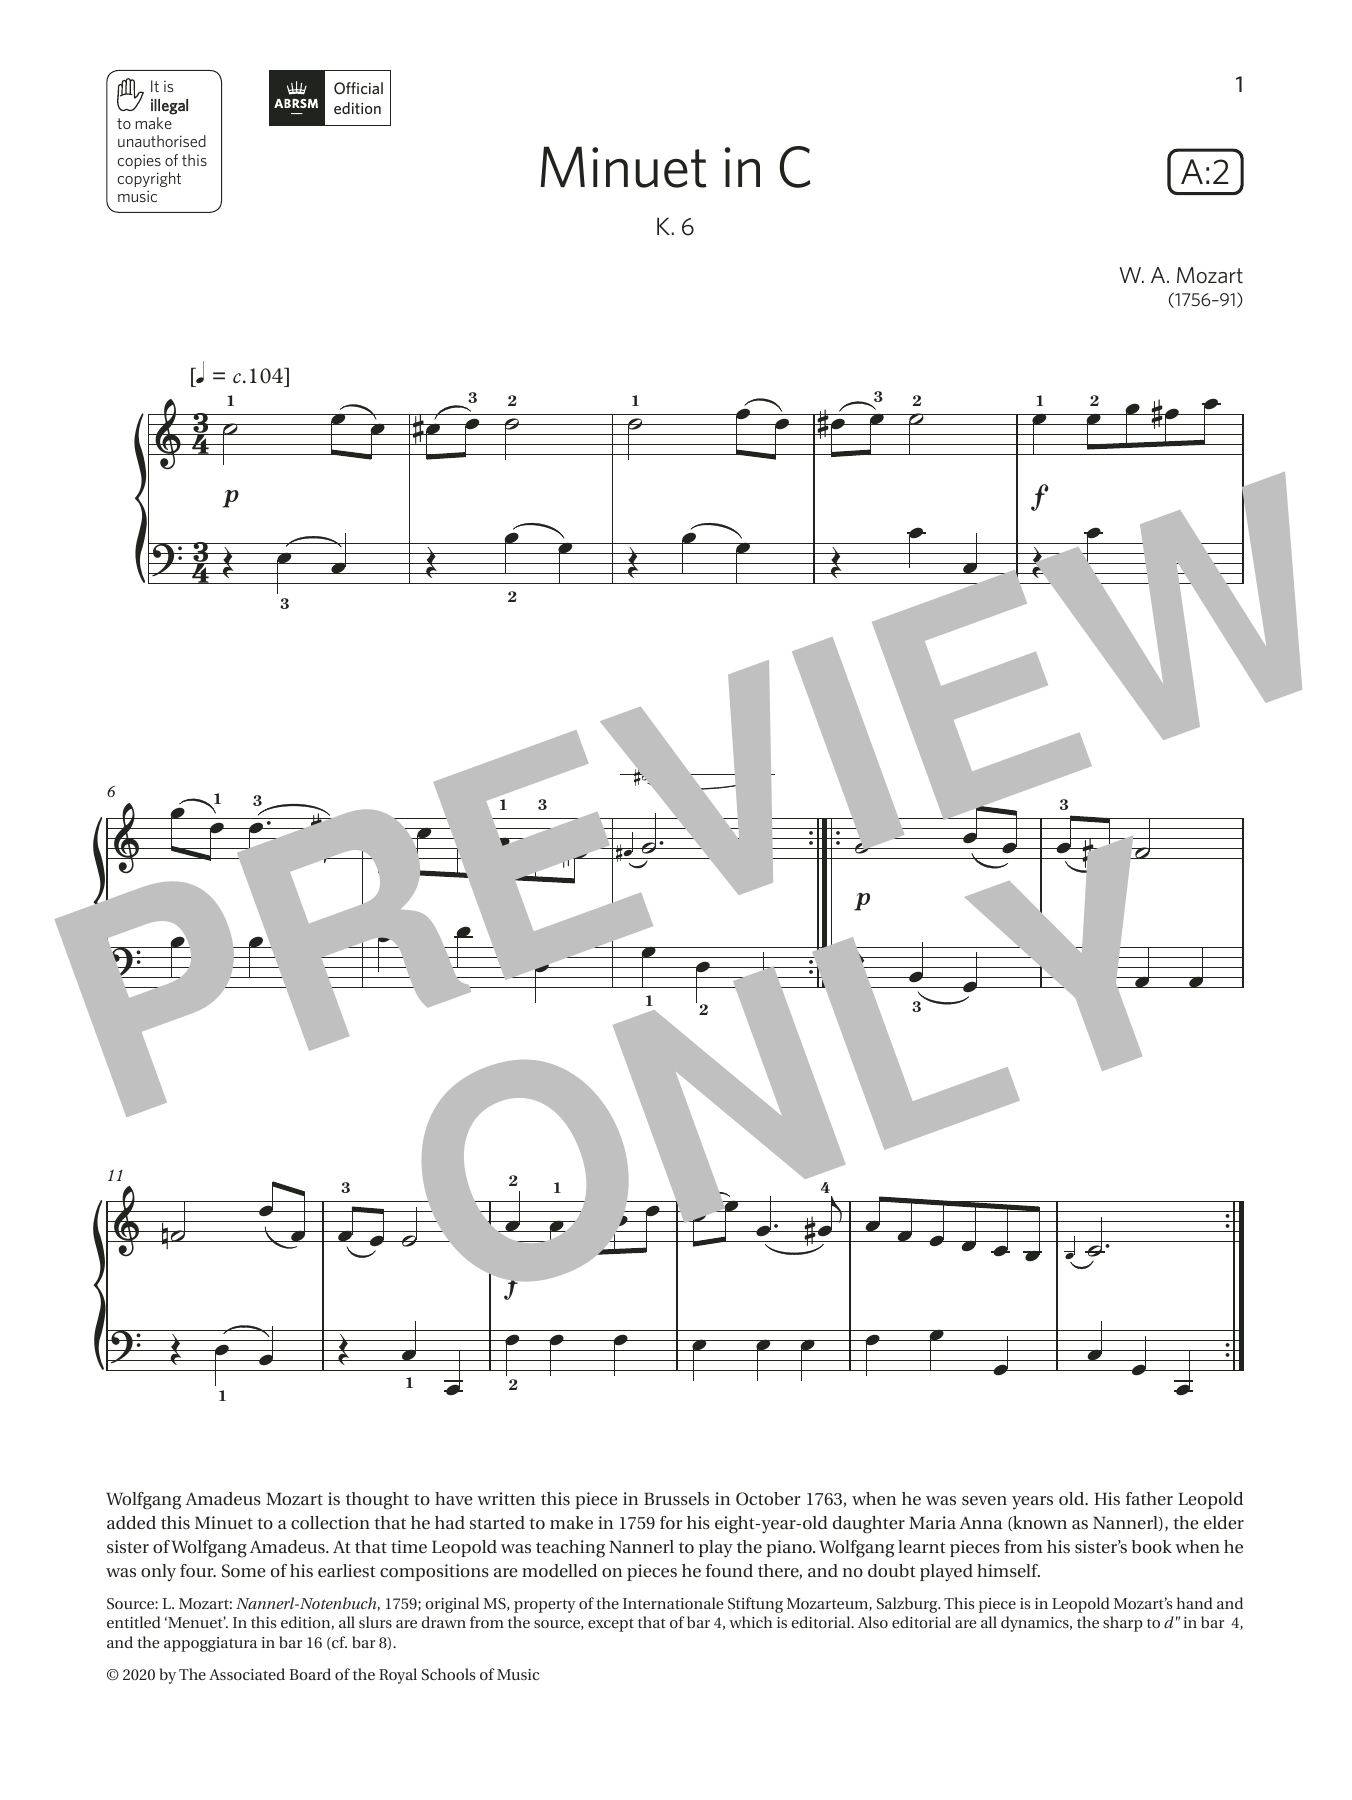 Download W. A. Mozart Minuet in C (Grade 1, list A2, from the Sheet Music